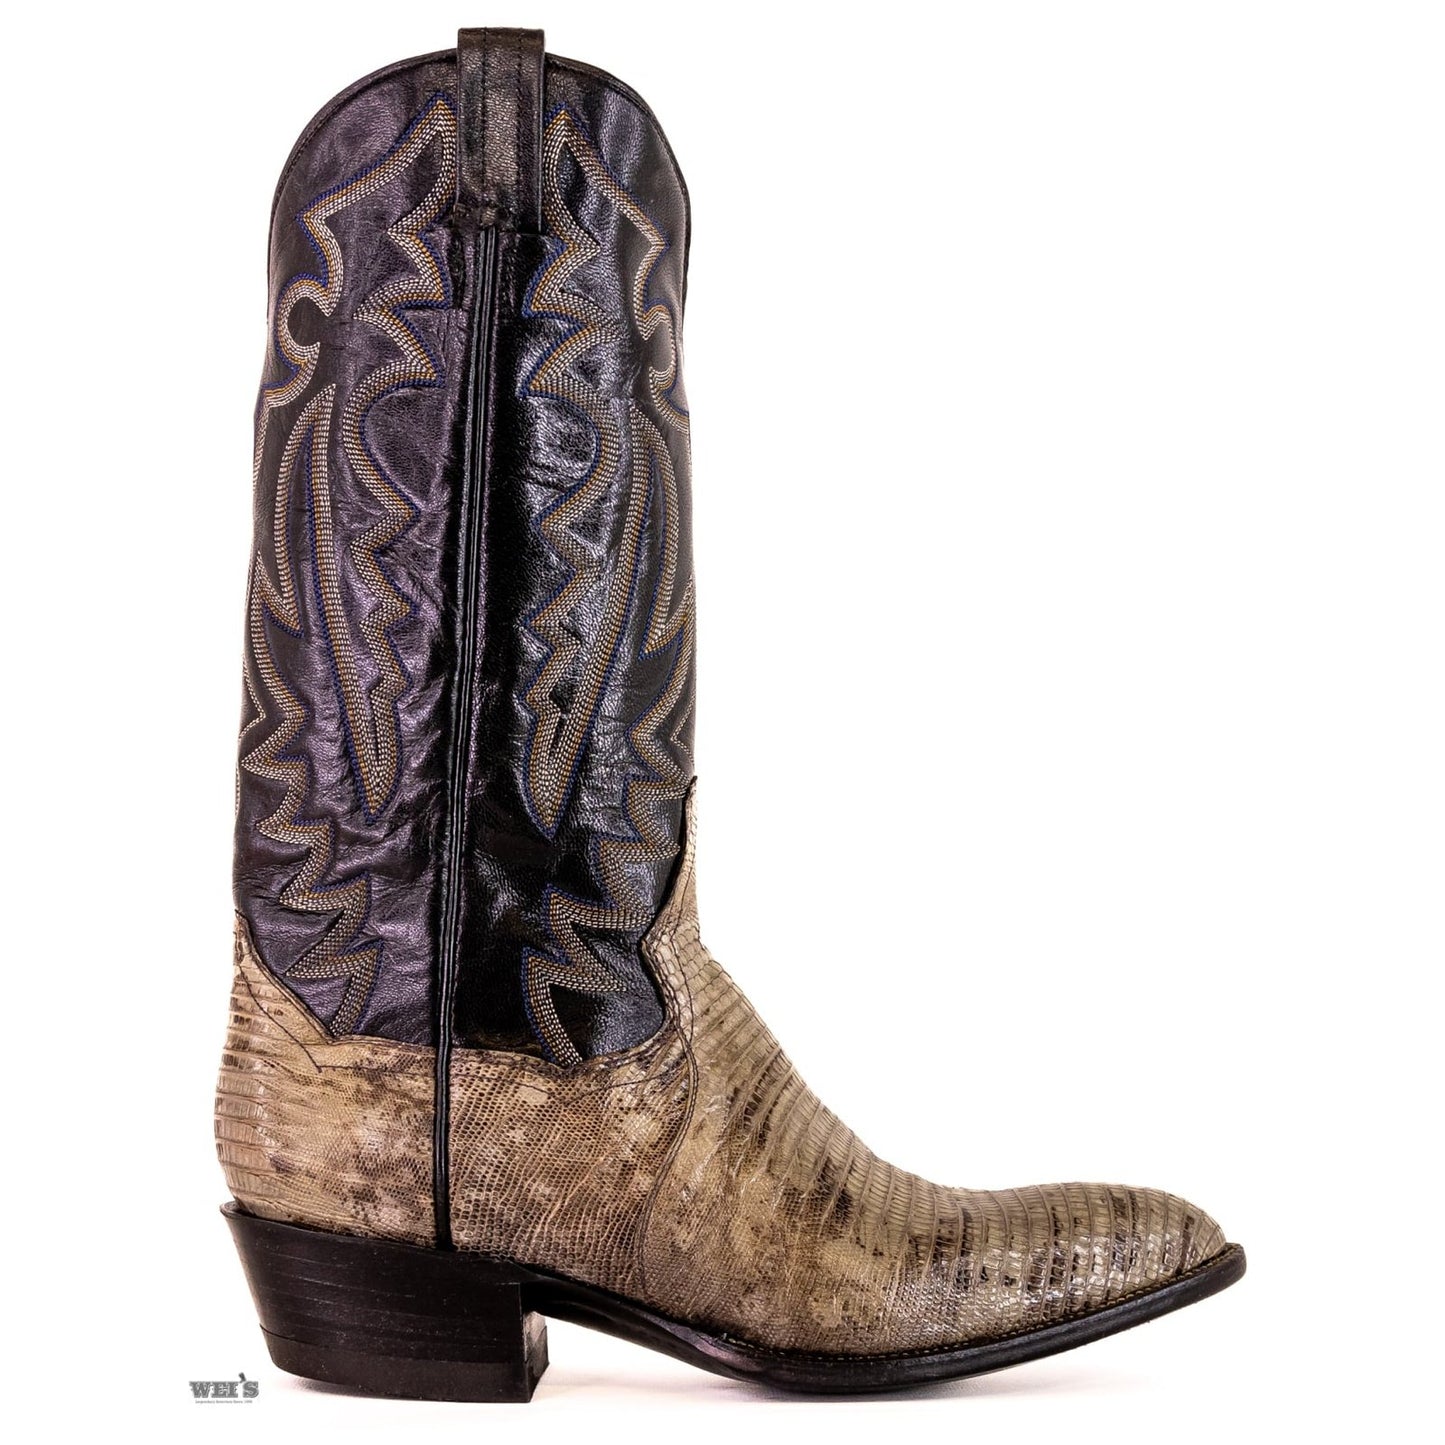 Panhandle Slim Men's Cowboy Boots 14" Exotic Lizard Cowboy Heel J Toe 10-LIZARD 25678